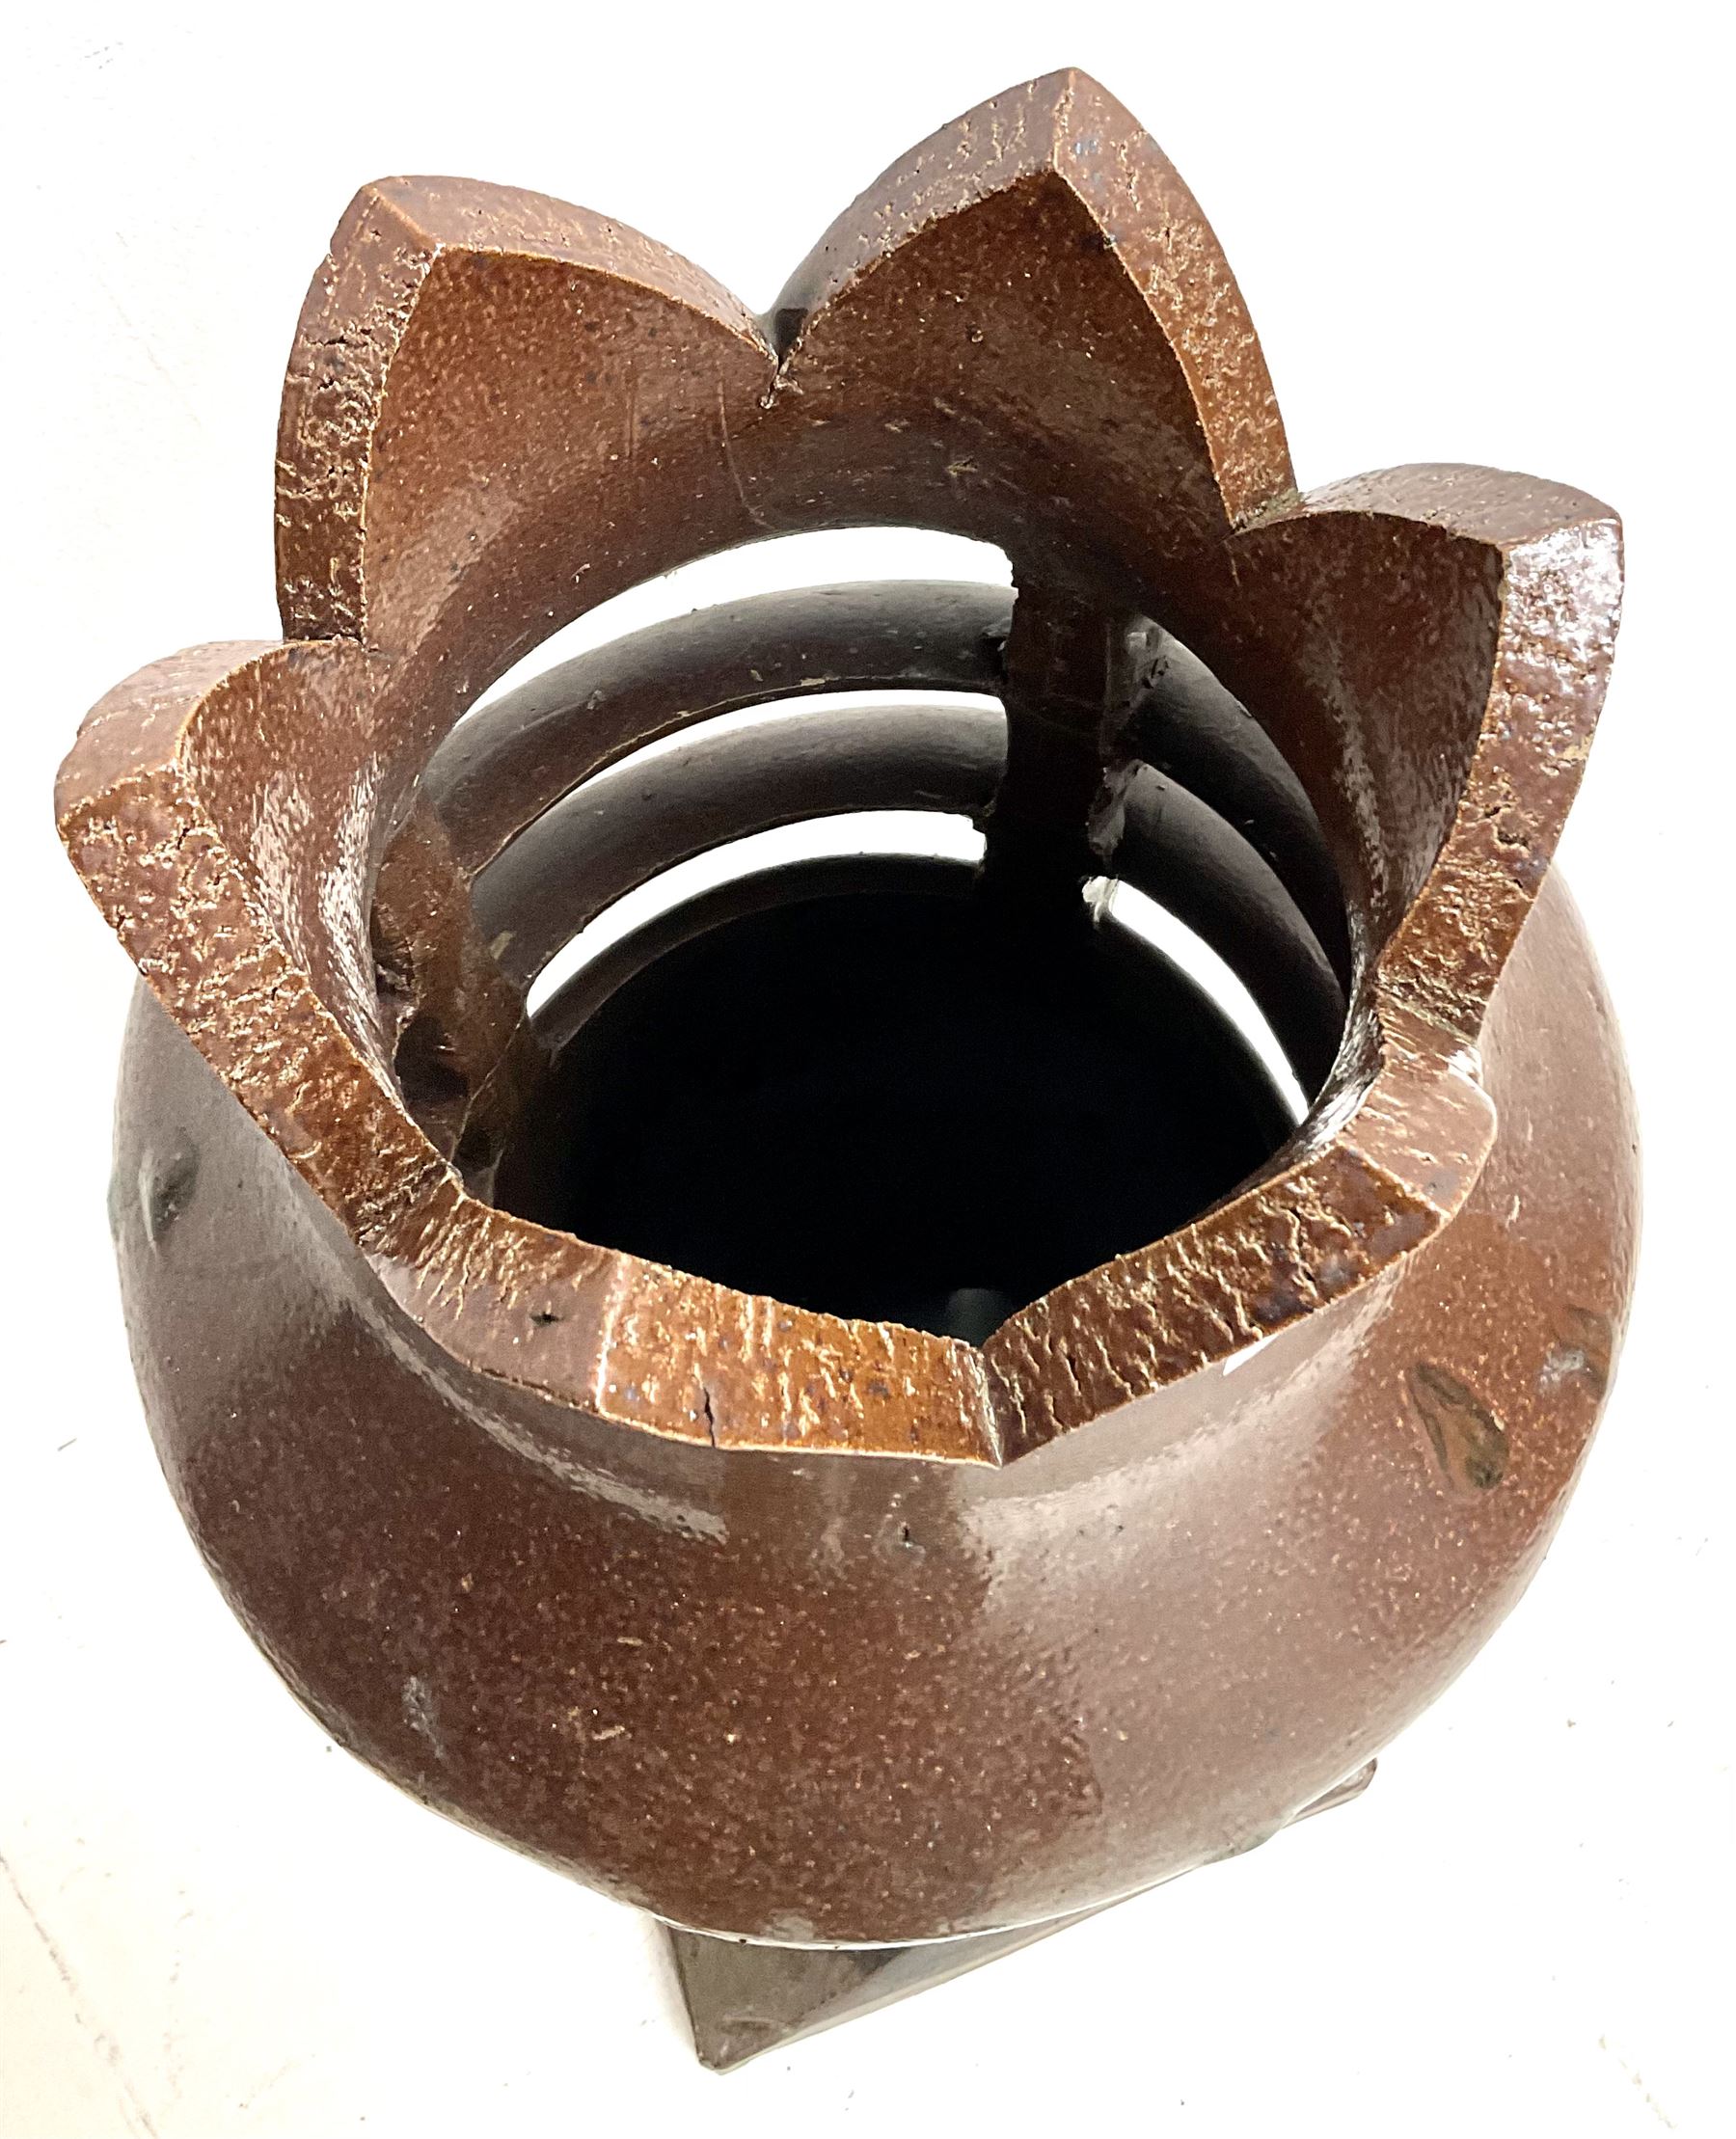 Salt glazed crown top chimney pot with side louvres - Image 2 of 3